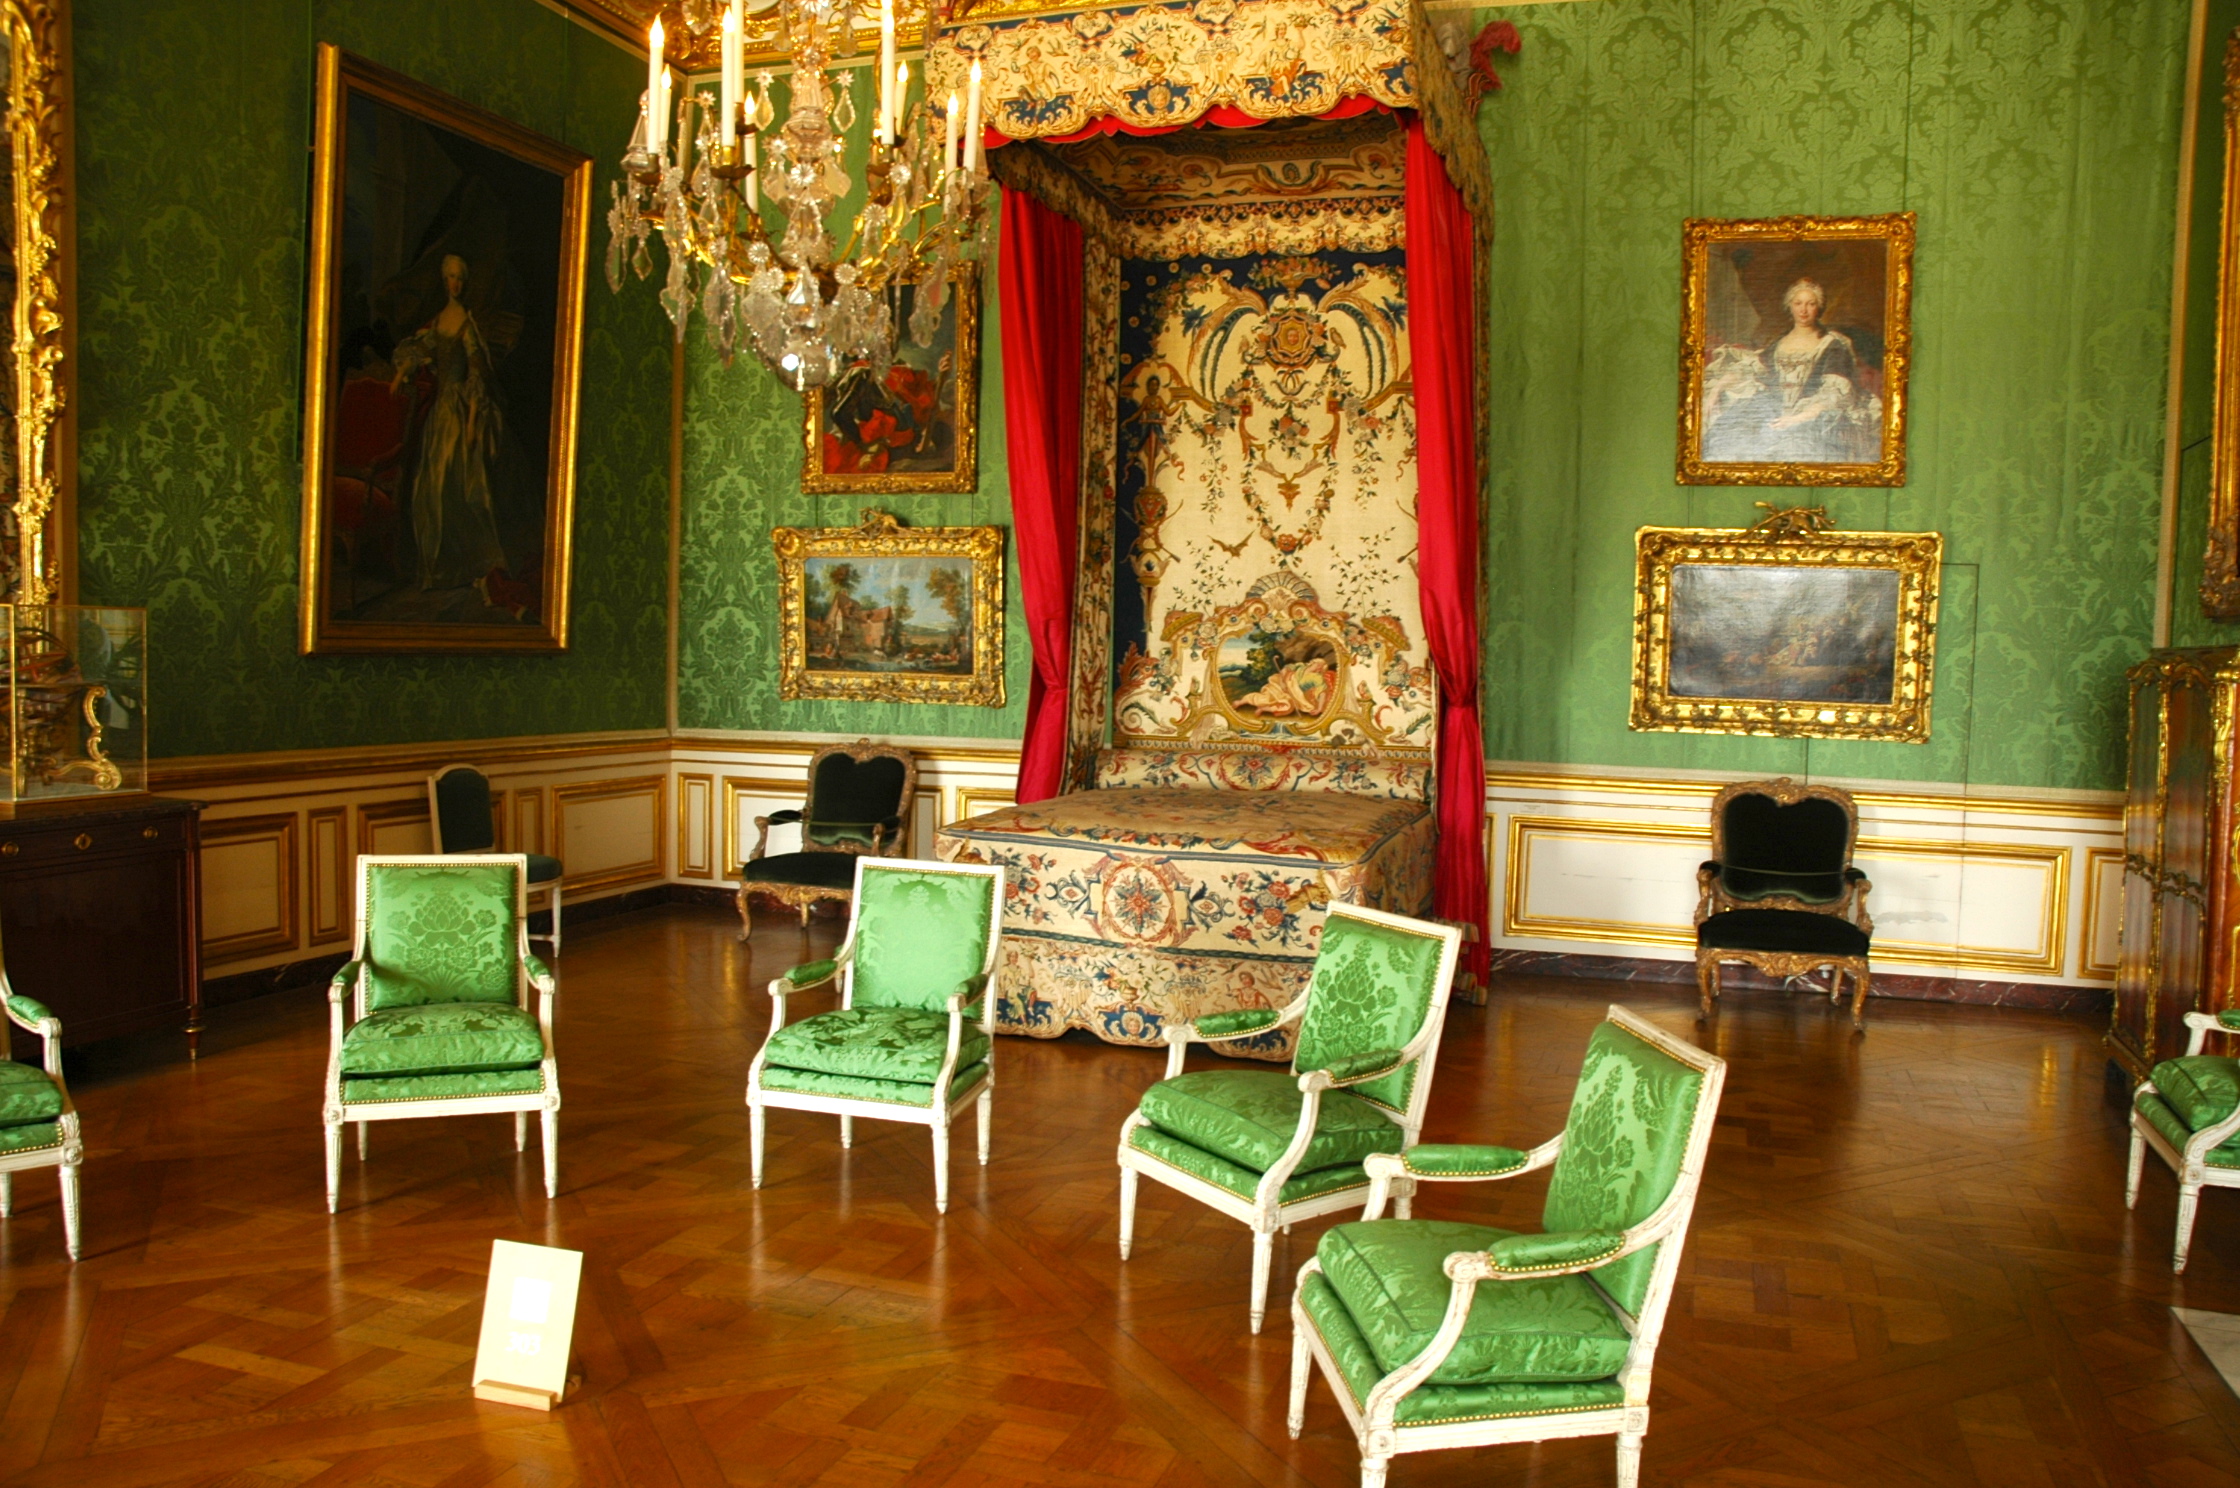 Os aposentos suntuosos do Palácio de Versalhes.